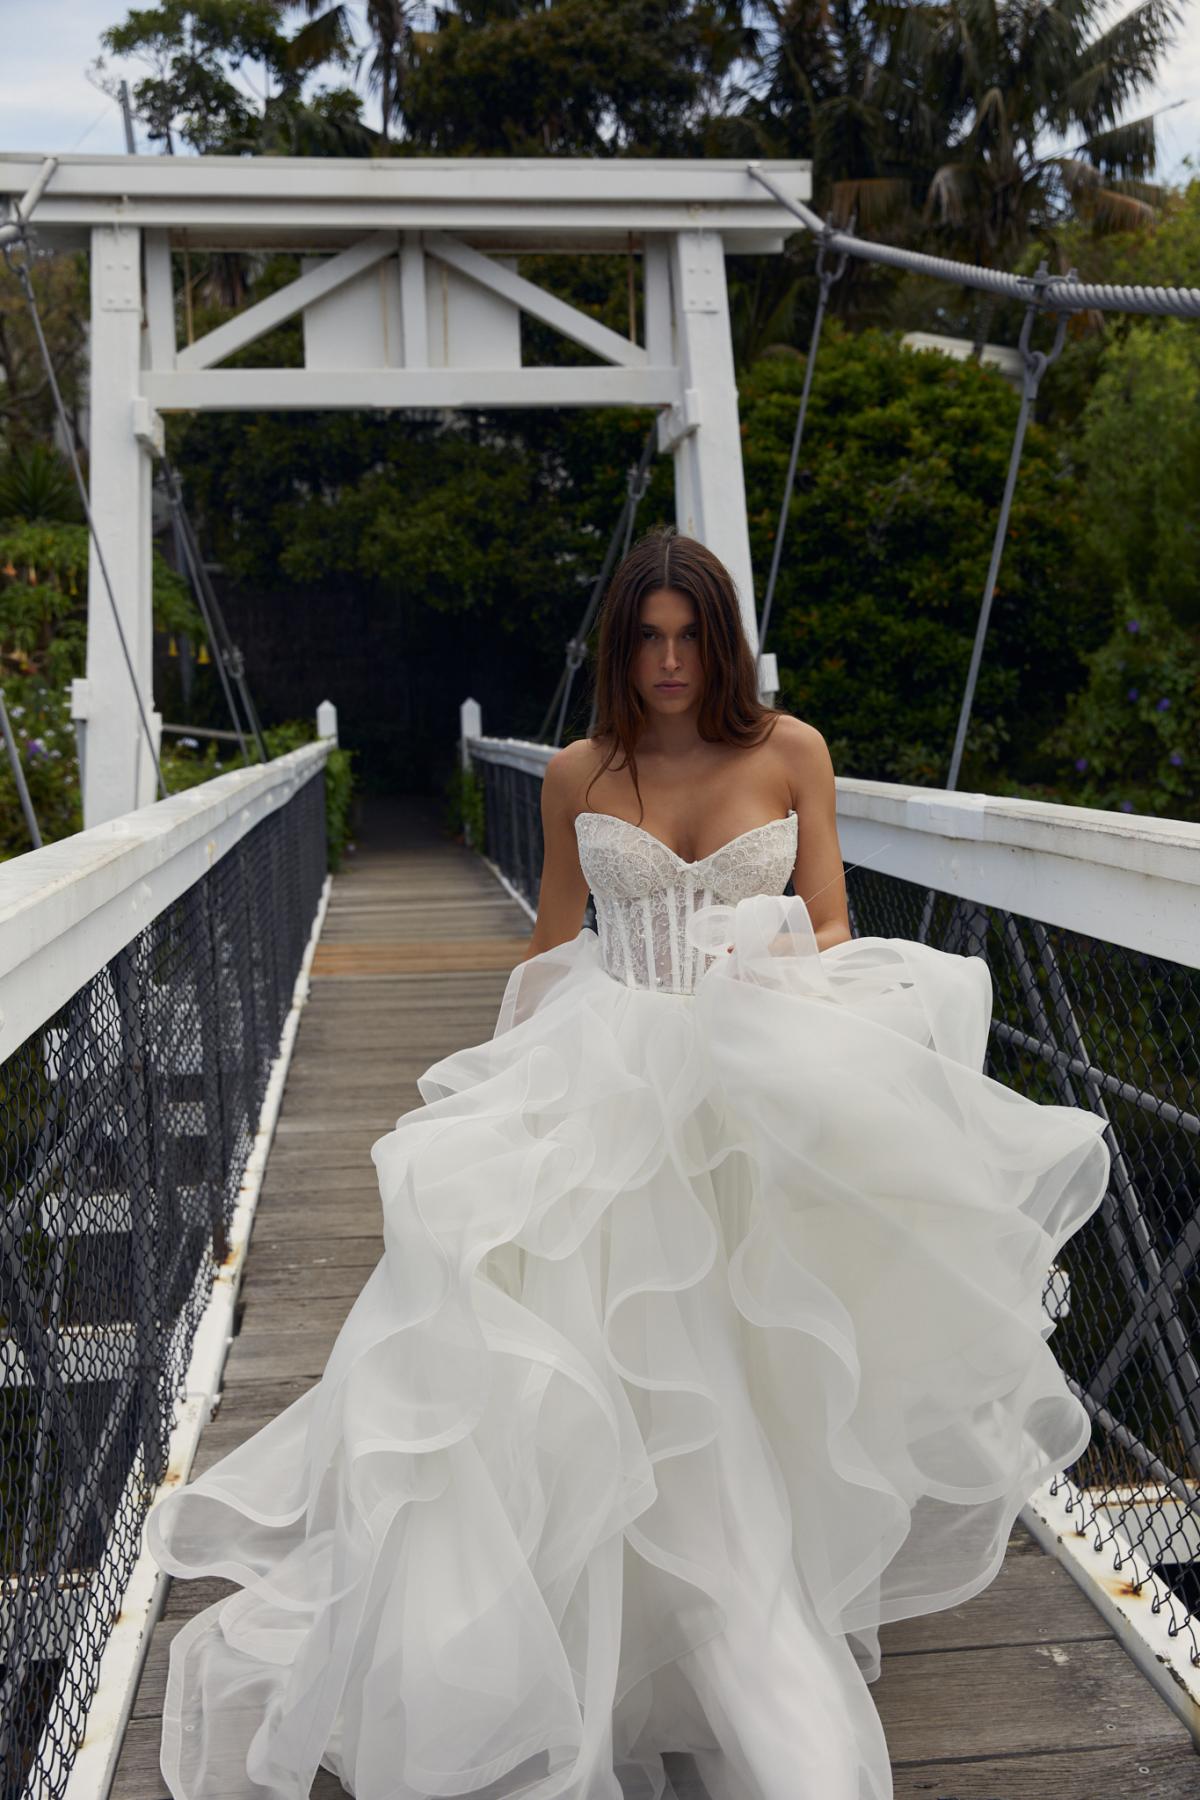 Simple & Fashion White Tulle Overlay Wedding Dress - Promfy